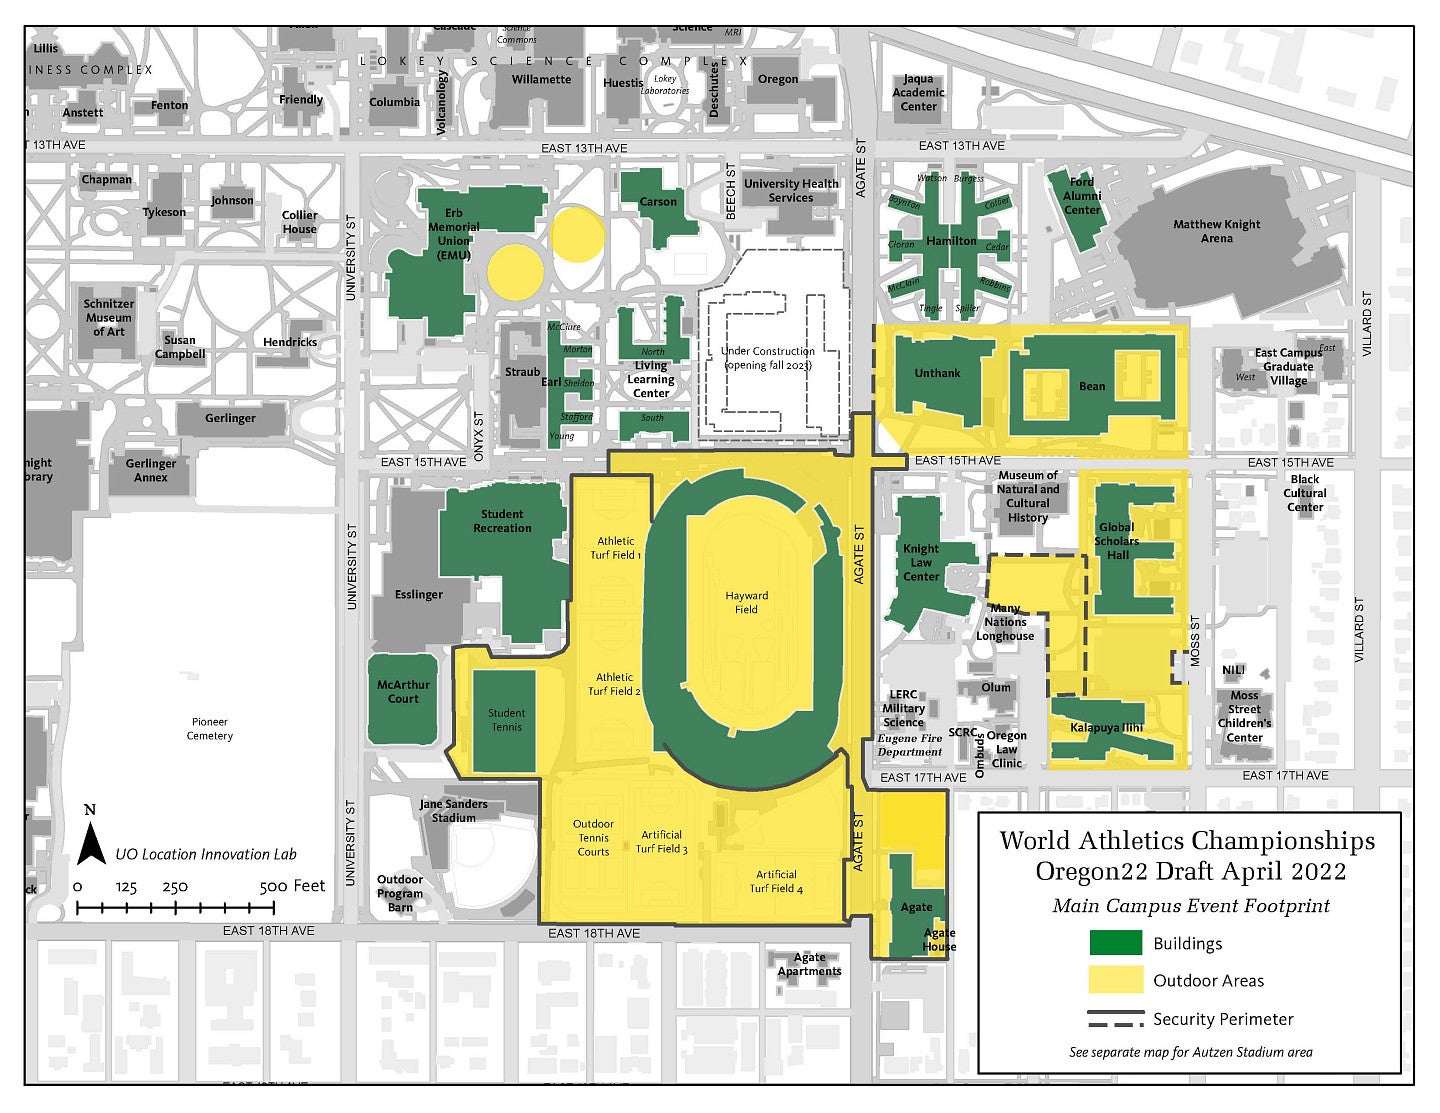 World Athletics Championship Oregon22 Main Campus Footprint